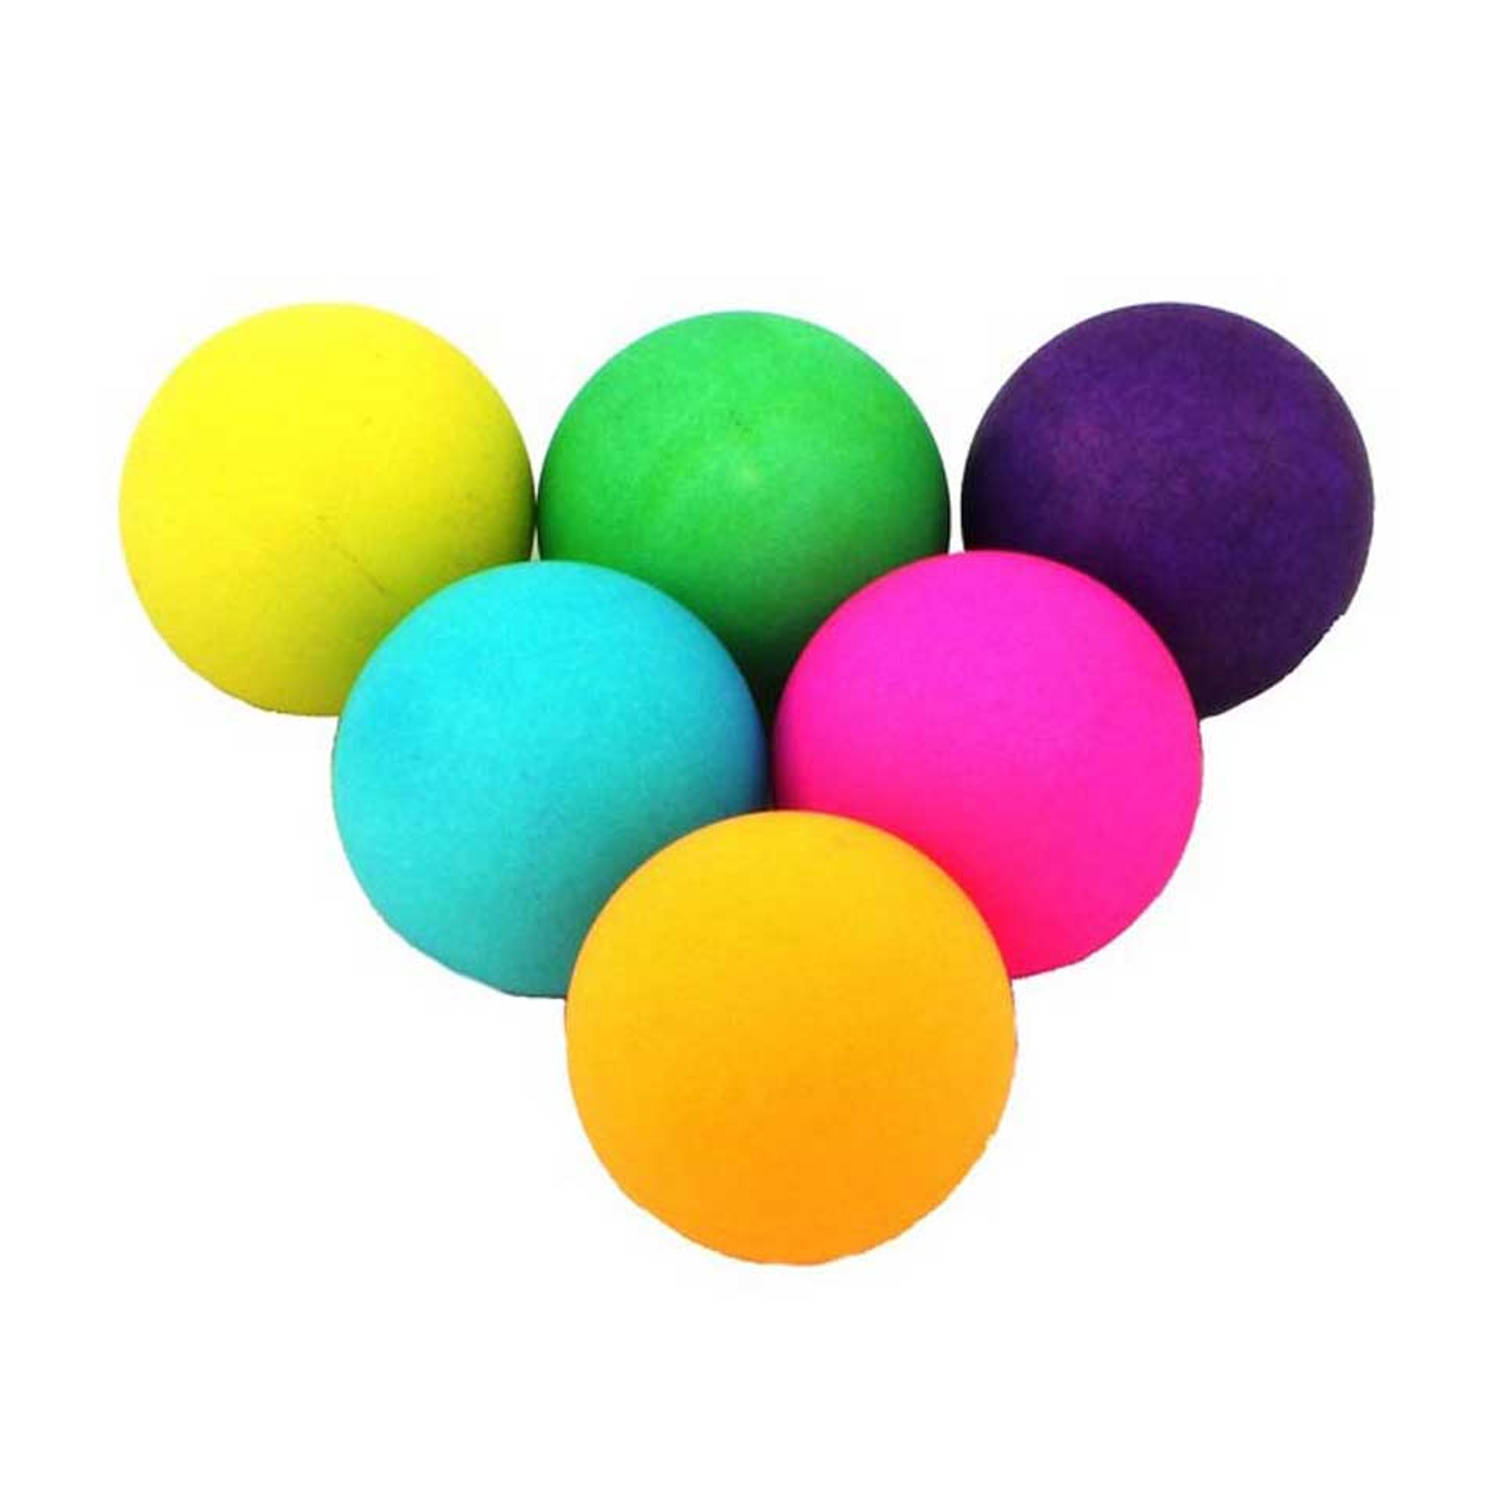 Donic Schildkröt Color - Tafeltennisballen - 6 stuks